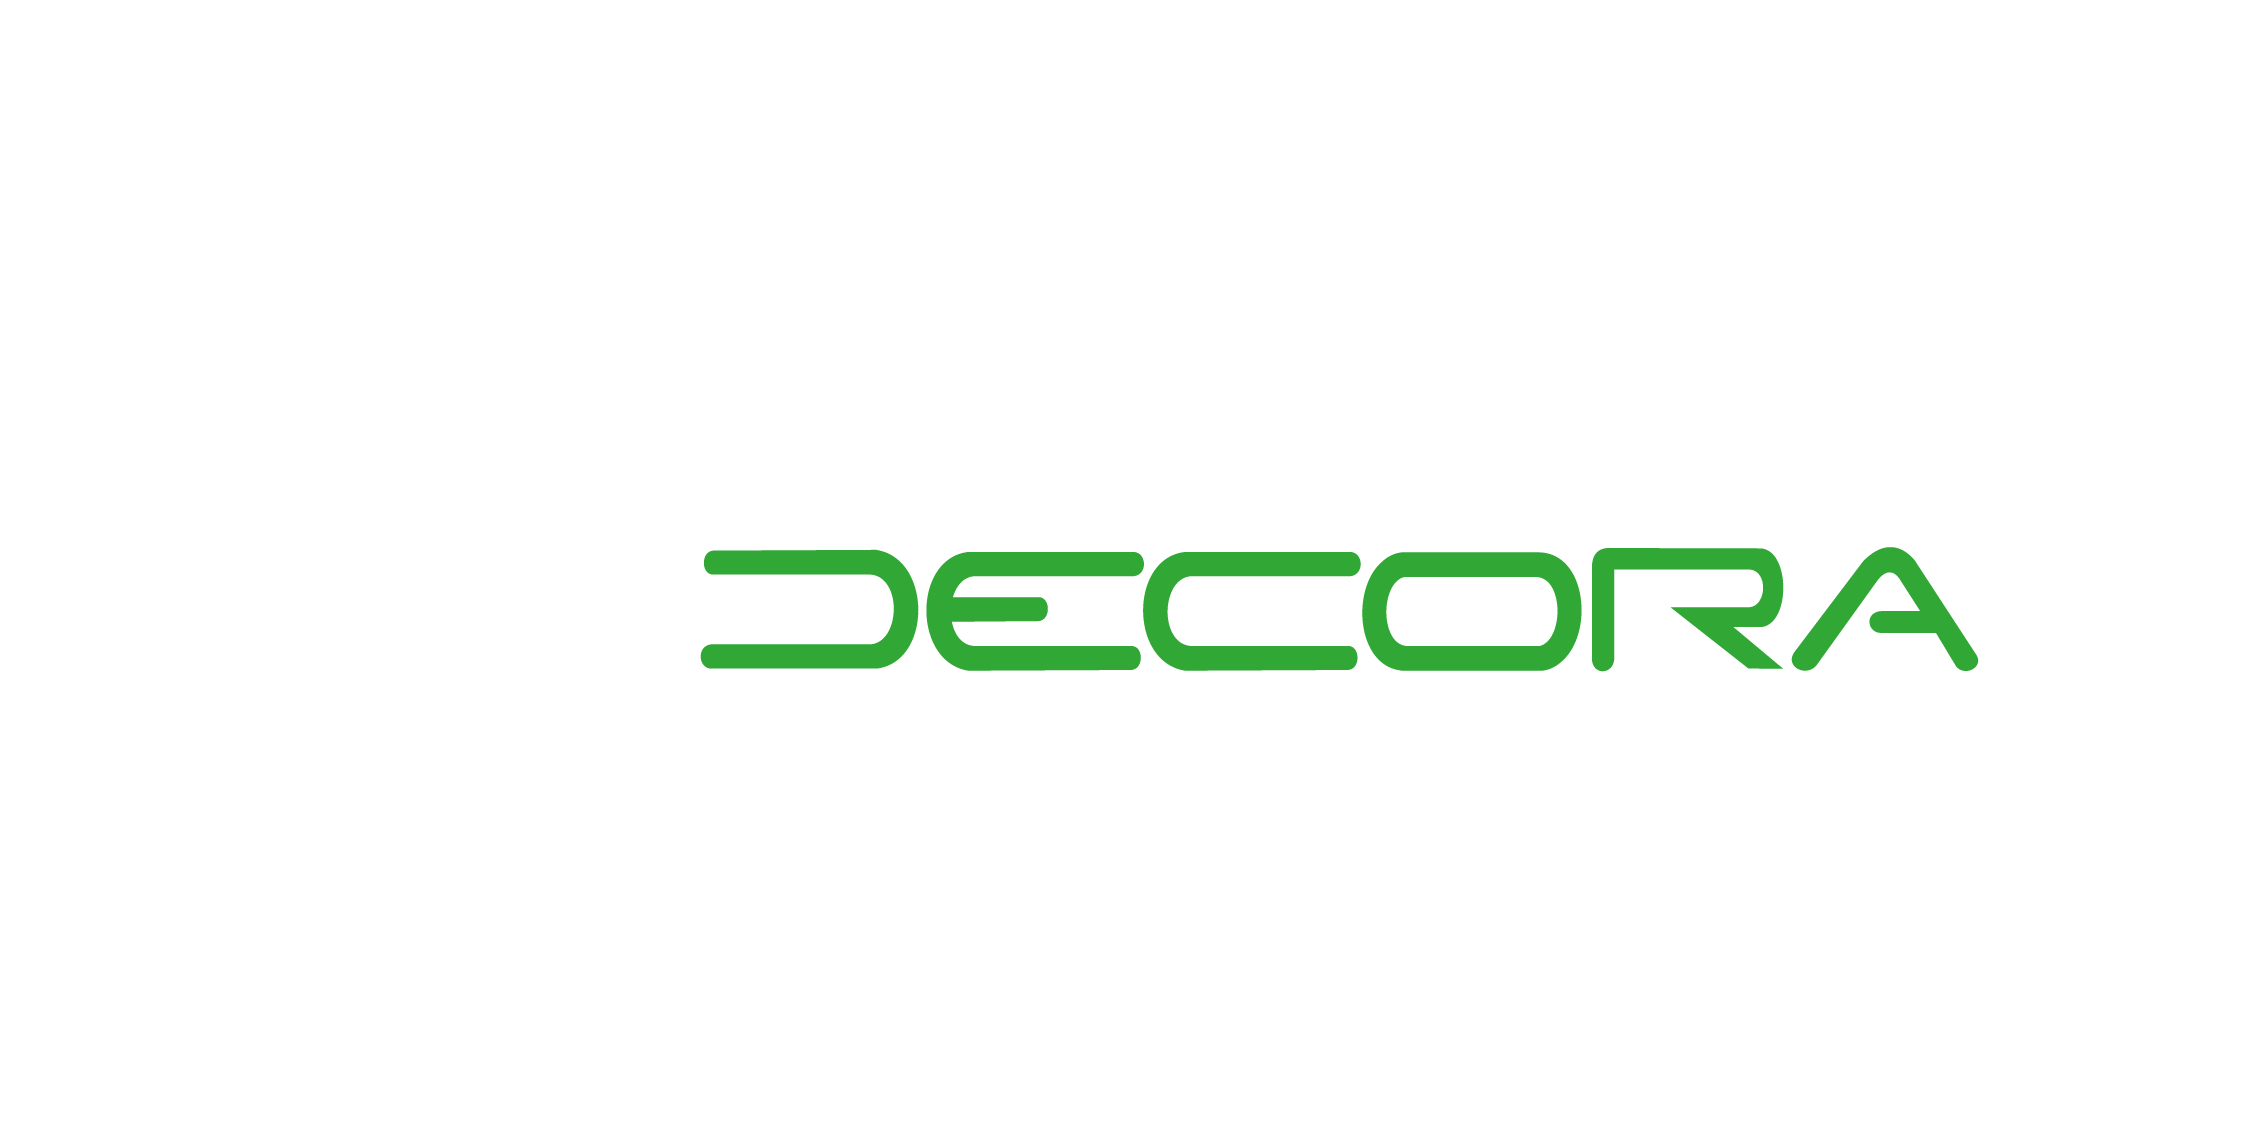 Decorasa Metalisteria